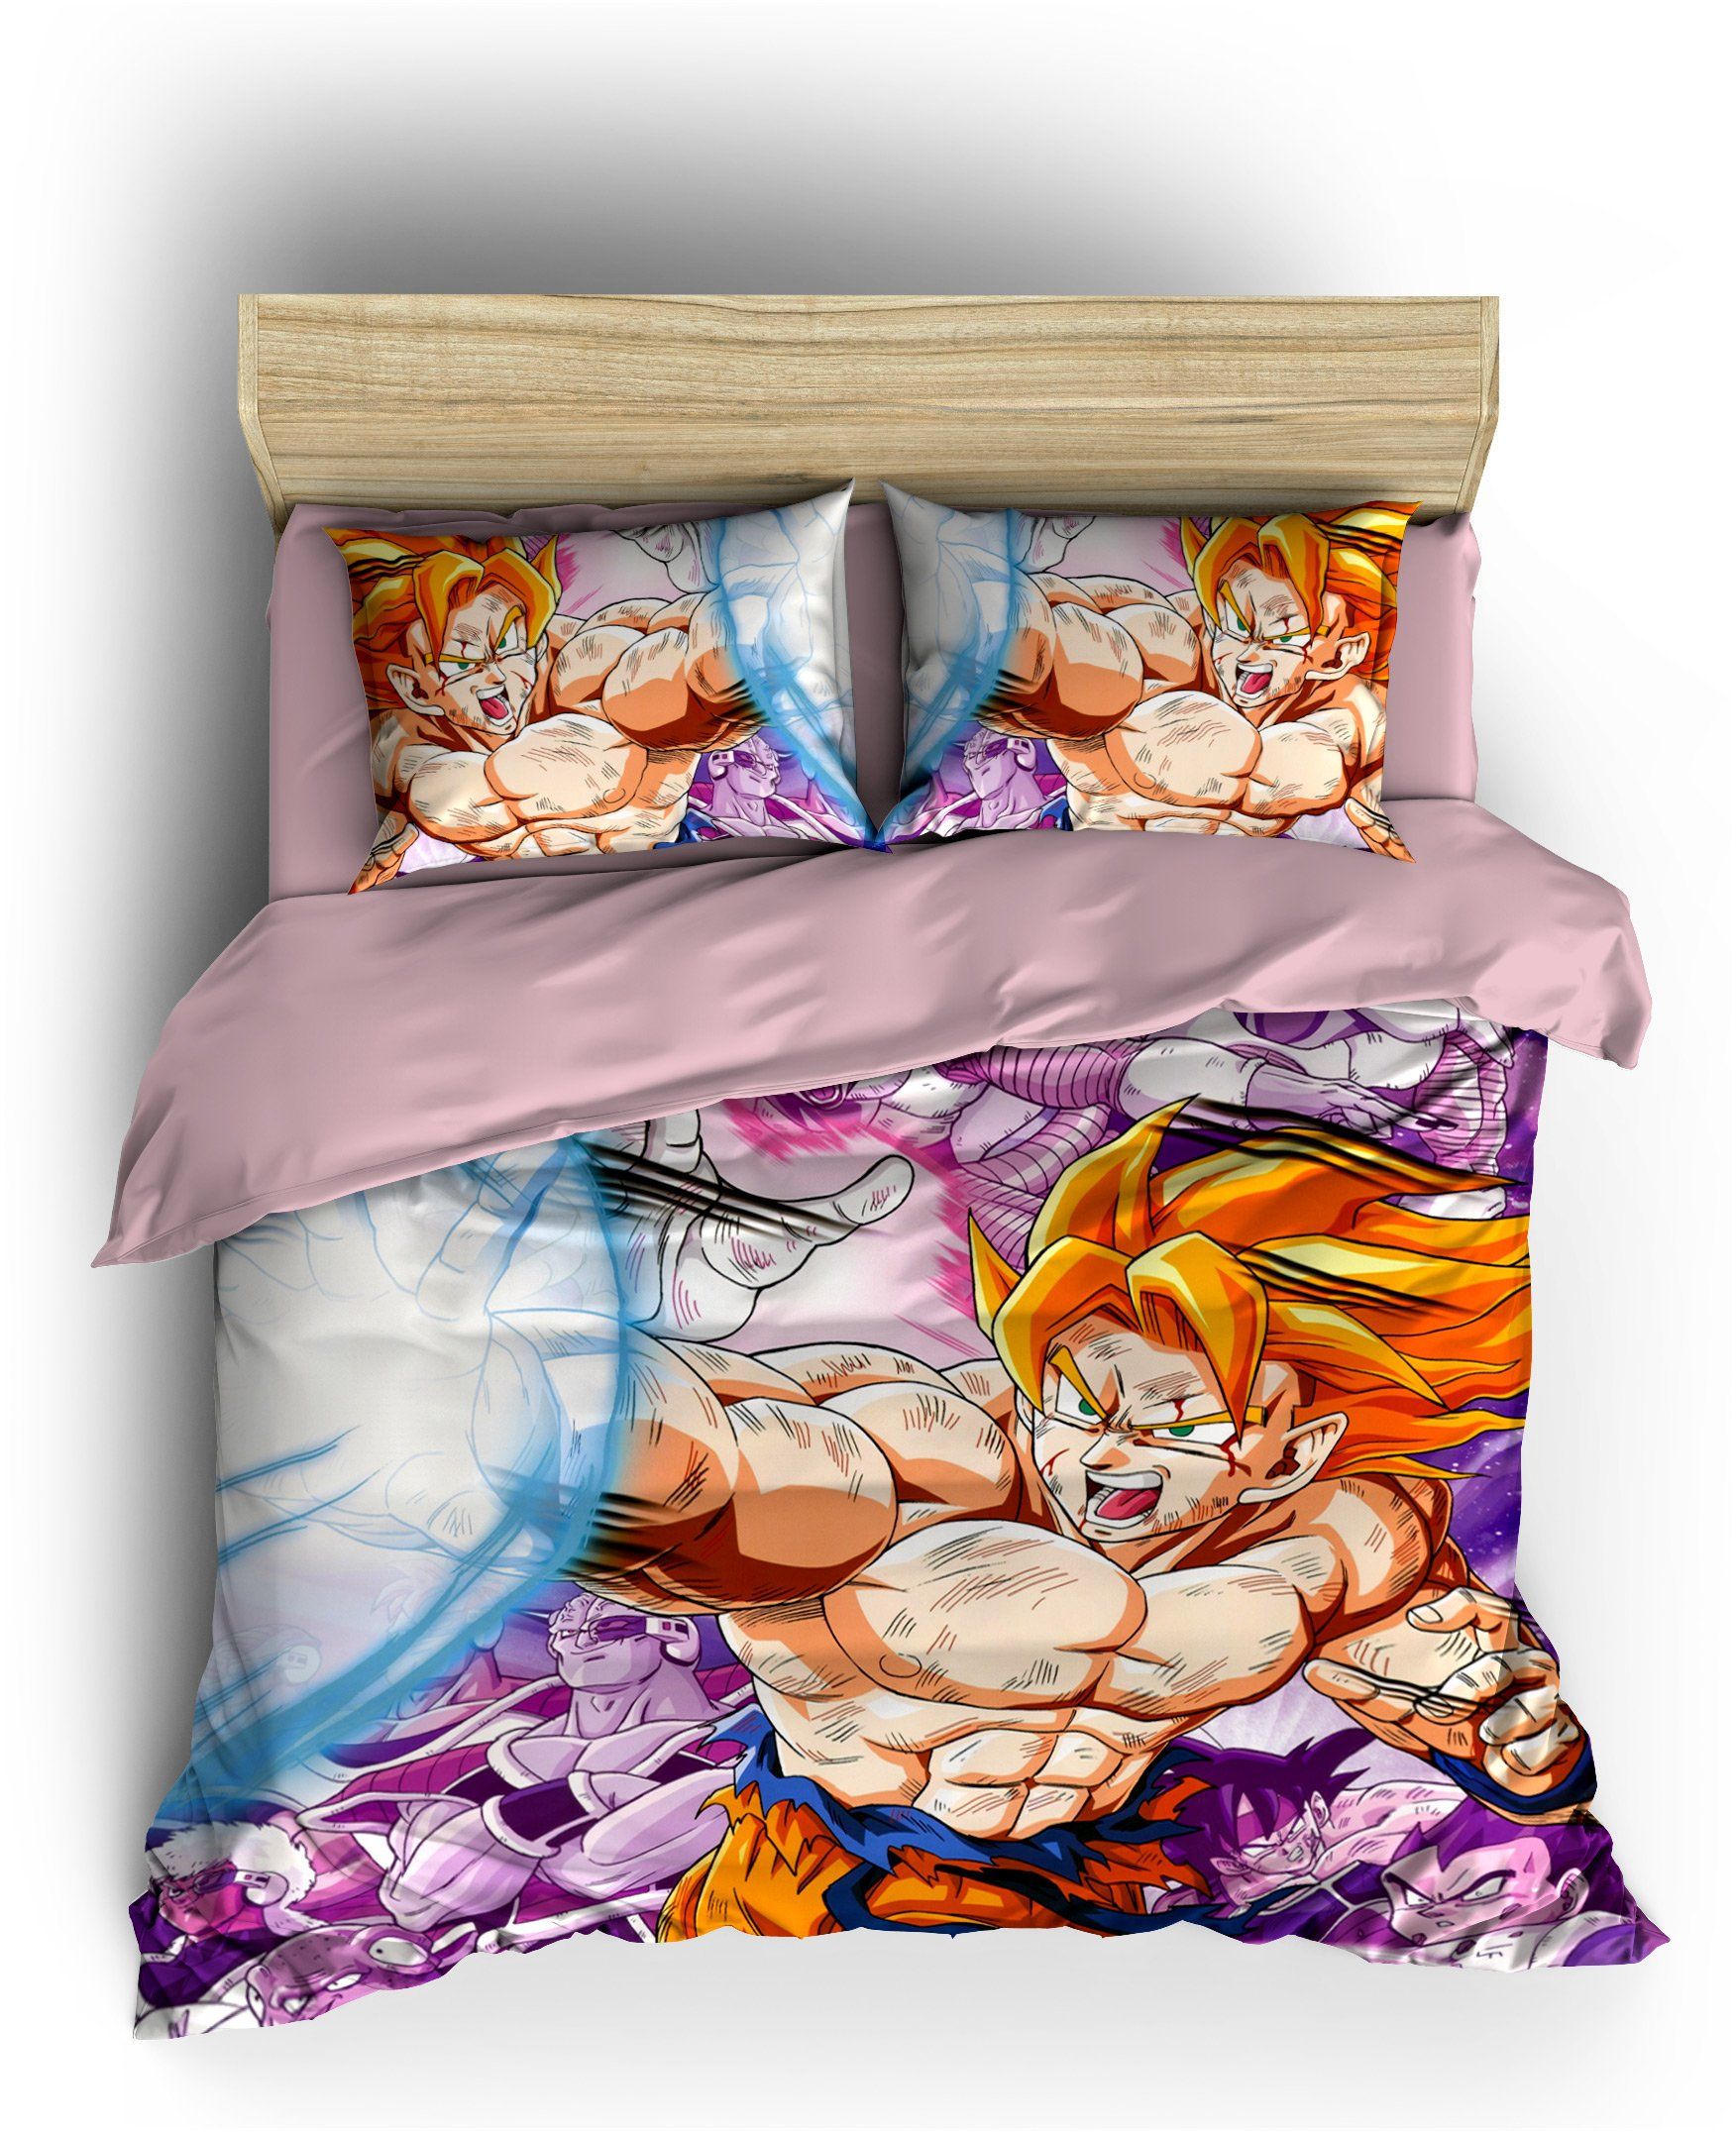 Comforter Cover DBZ  Goku Kikoha Single - AU (140x210cm) Official Dragon Ball Z Merch